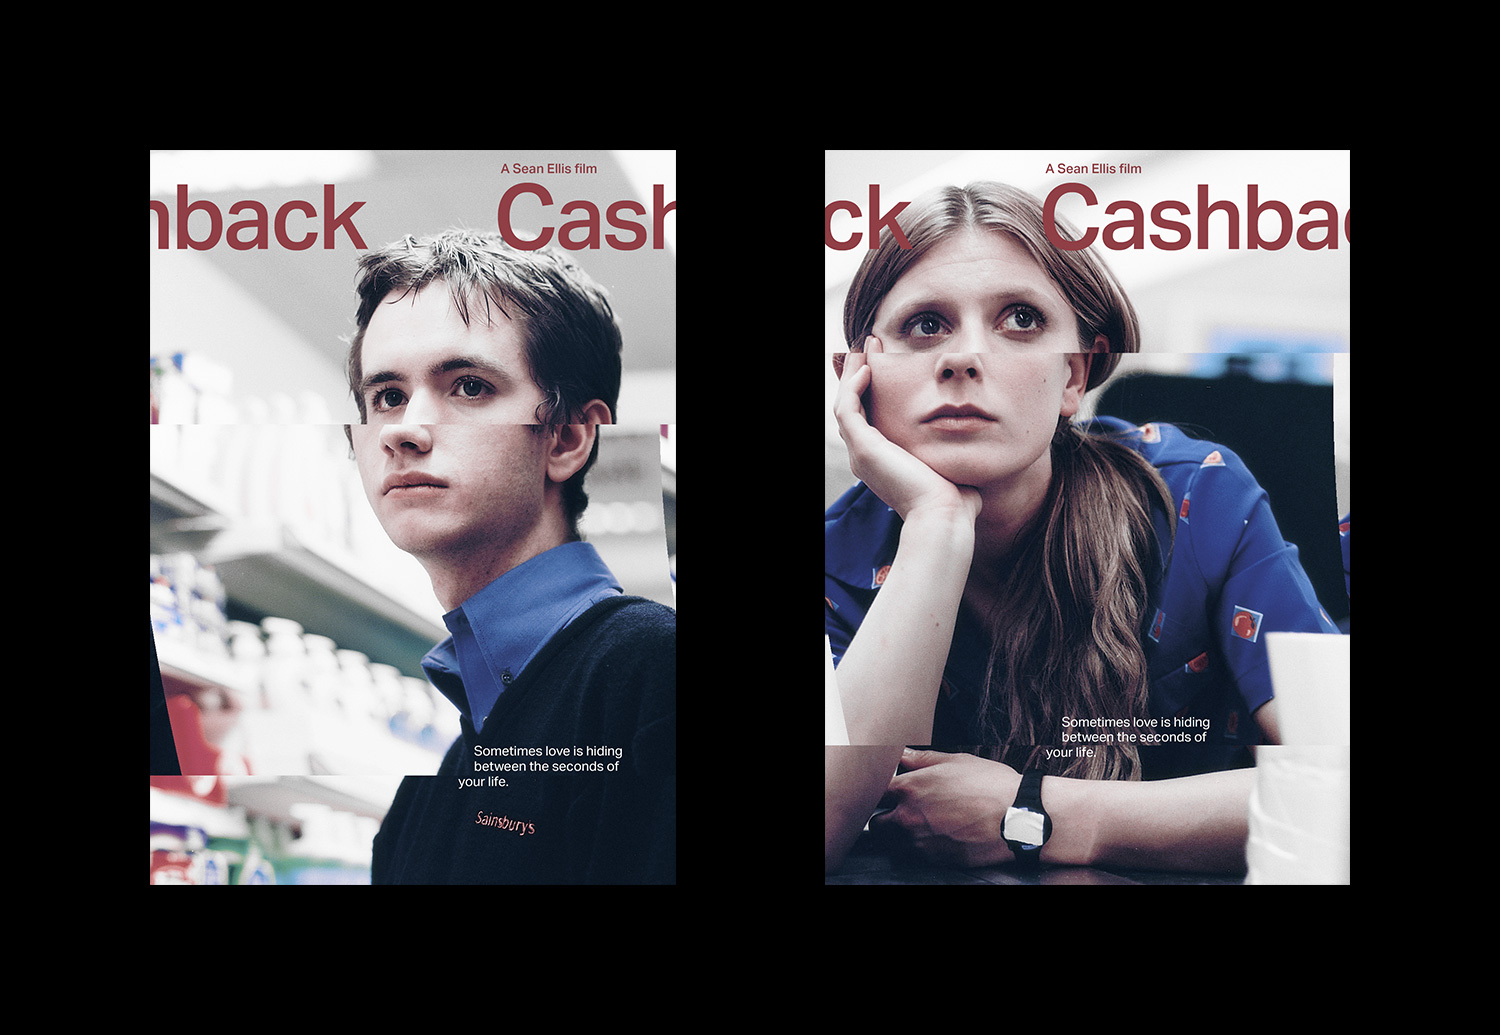 Cashback movie poster by Viktor Lanneld